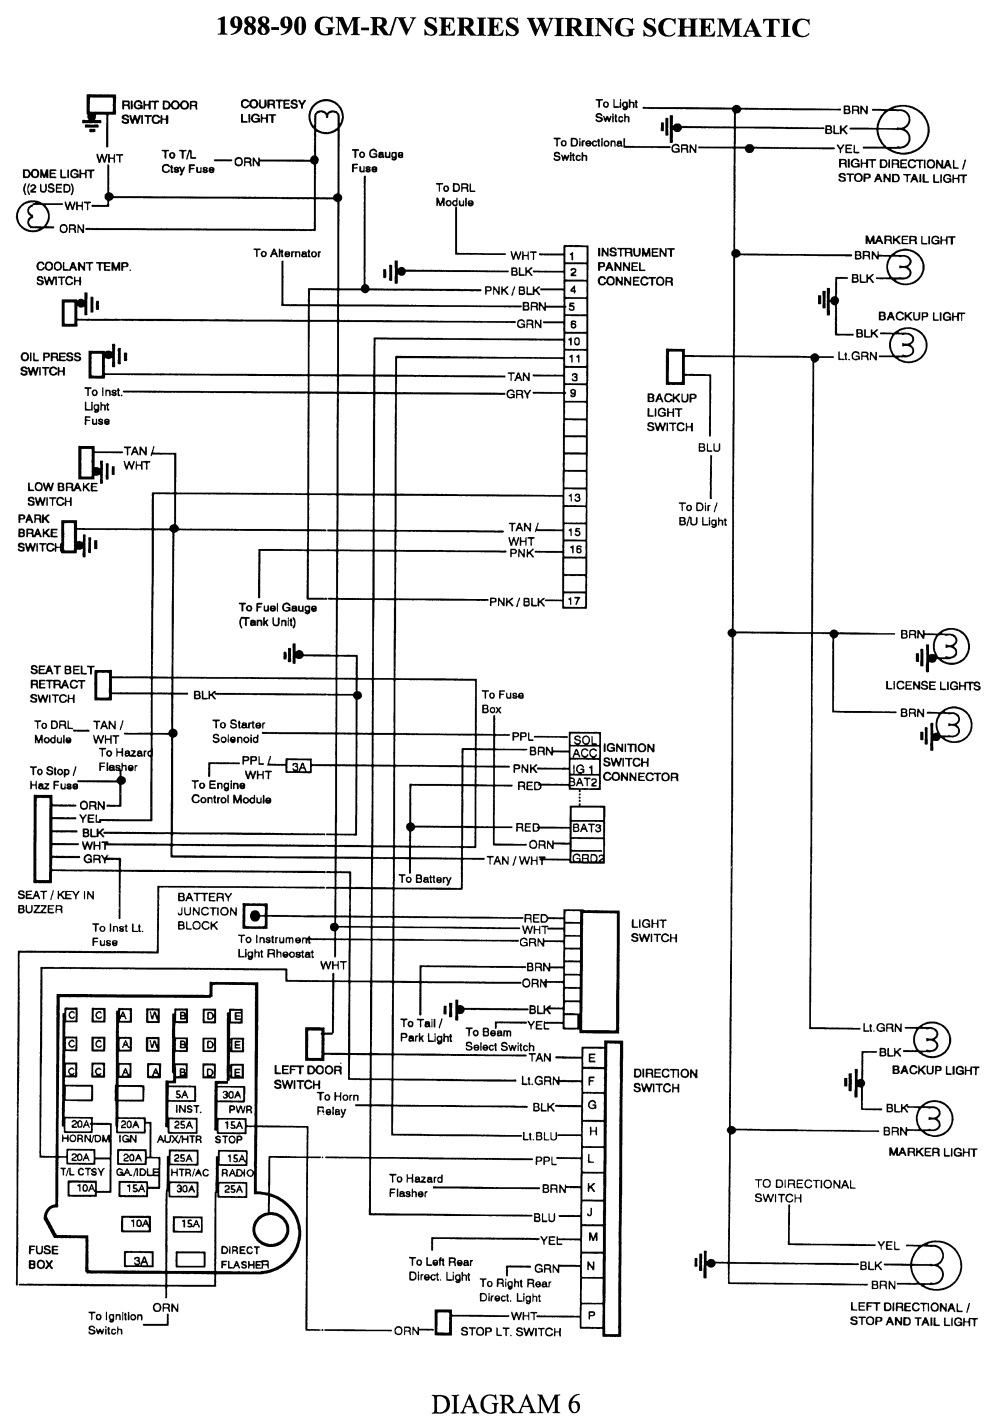 repair guides wiring diagrams wiring diagrams autozone com 88 98 gm truck wiring diagram